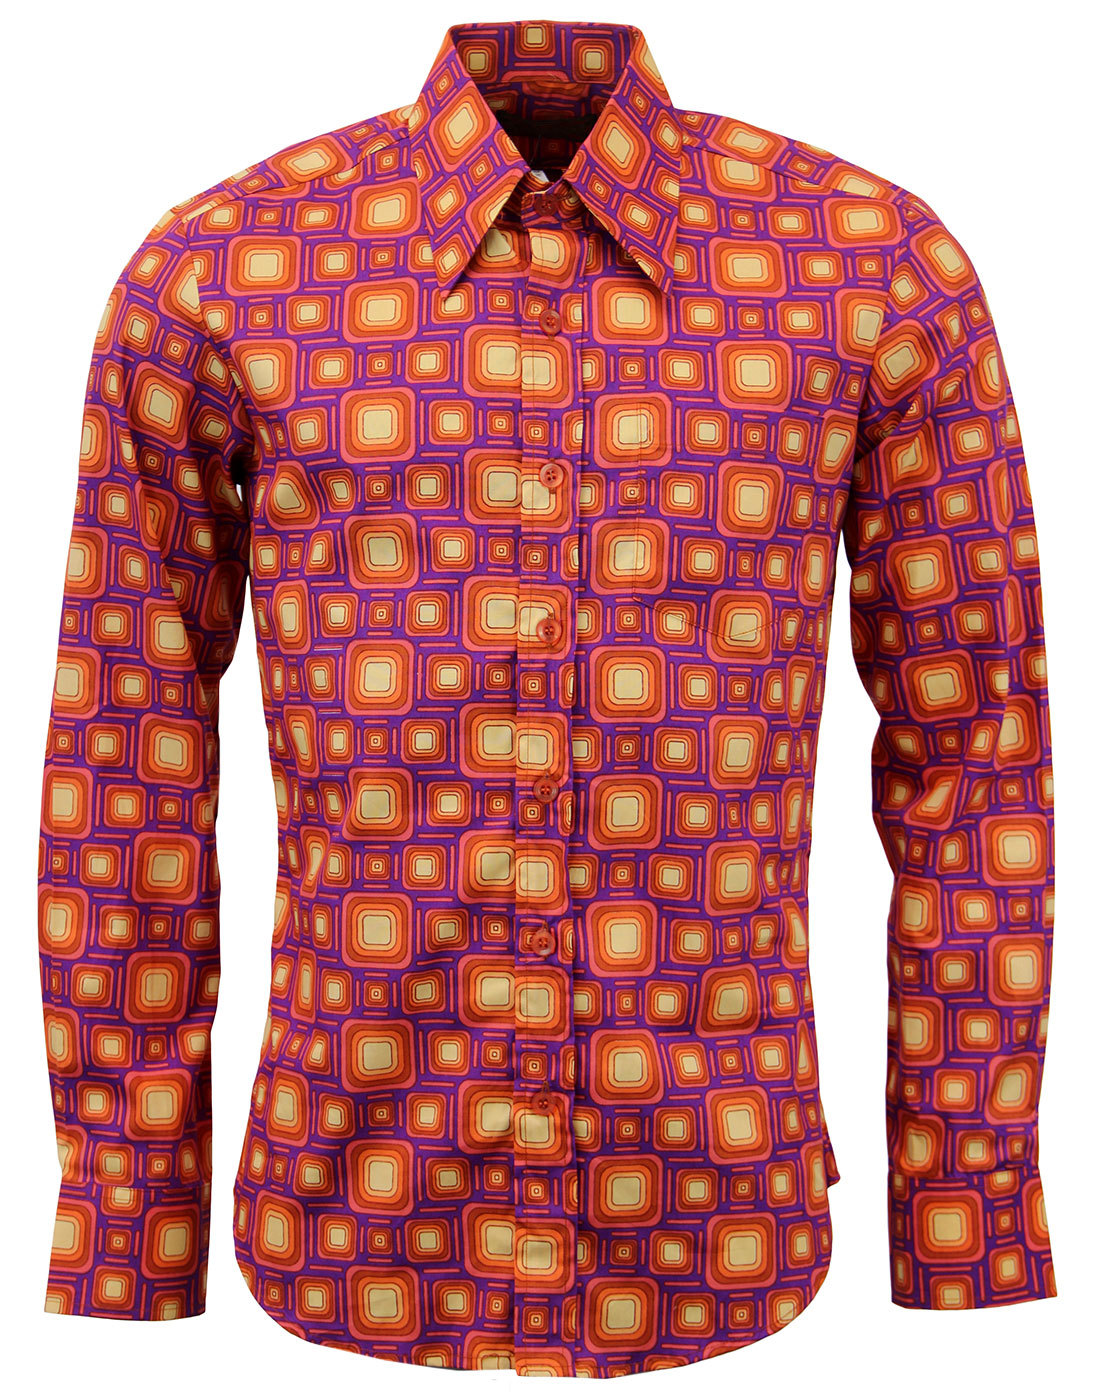 CHENASKI Box Tops Retro 70s Indie Geometric Pattern Shirt Violet